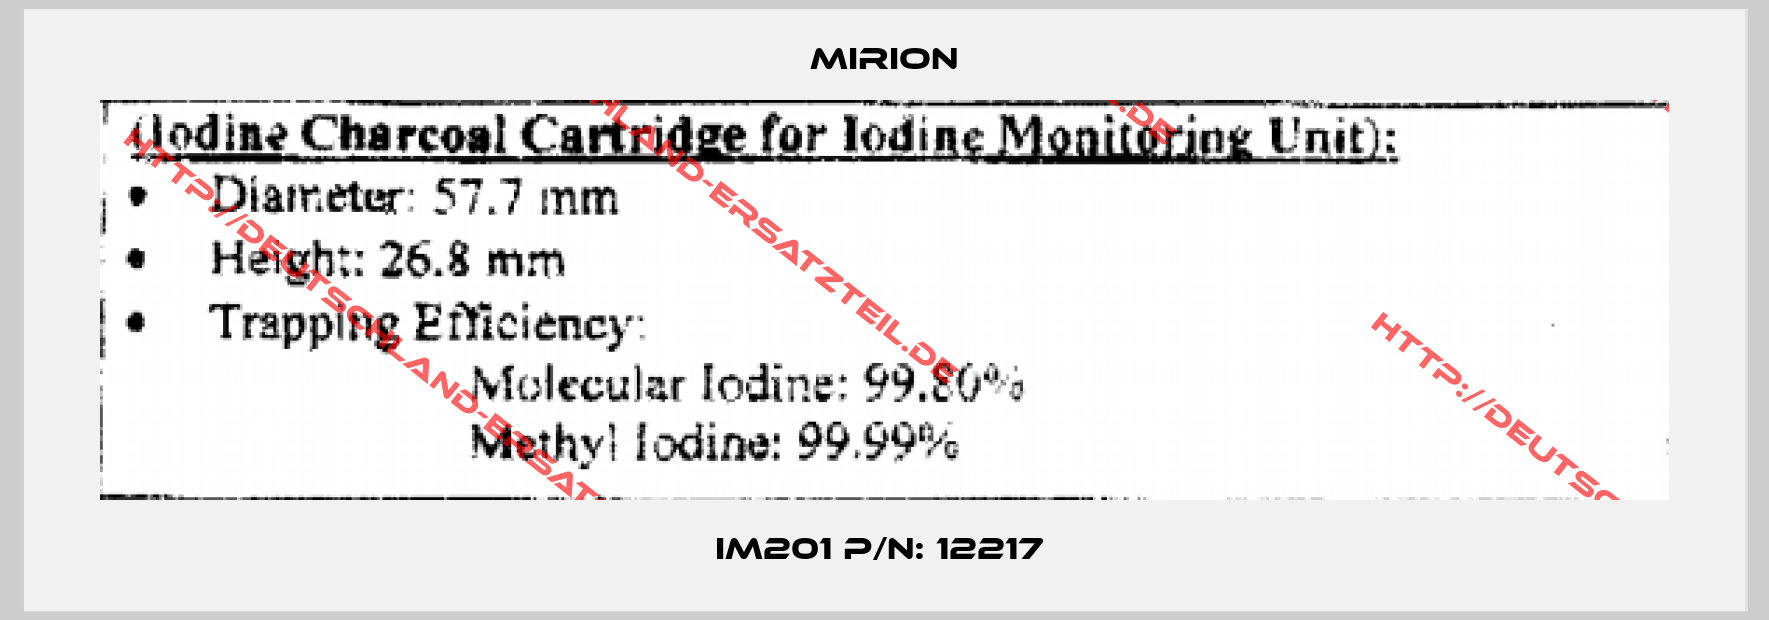 Mirion-IM201 P/N: 12217 